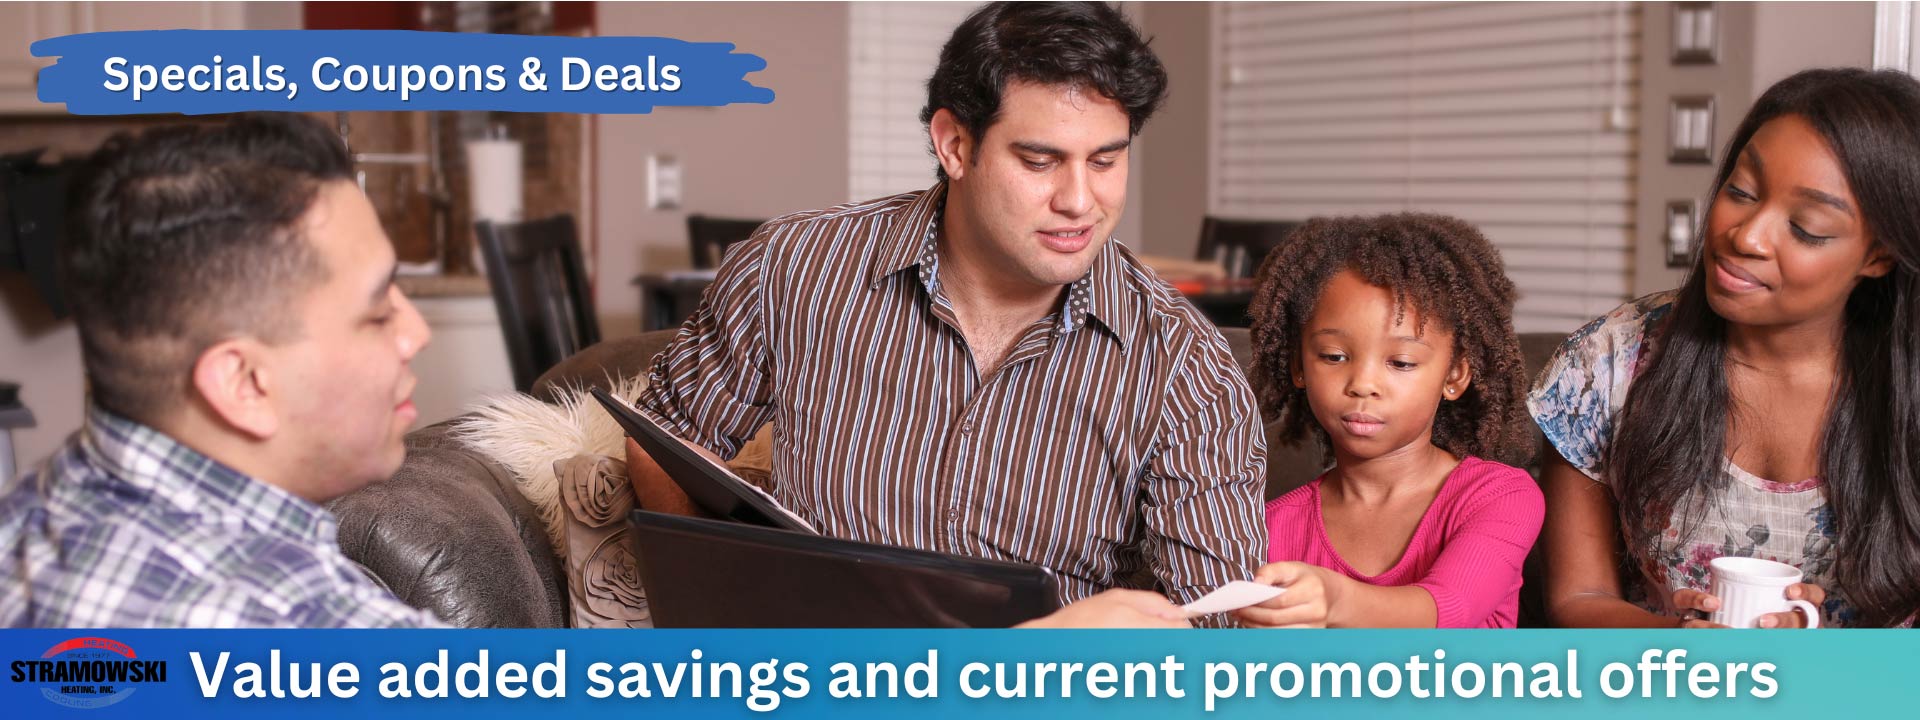 Specials Coupons Deals & Savings